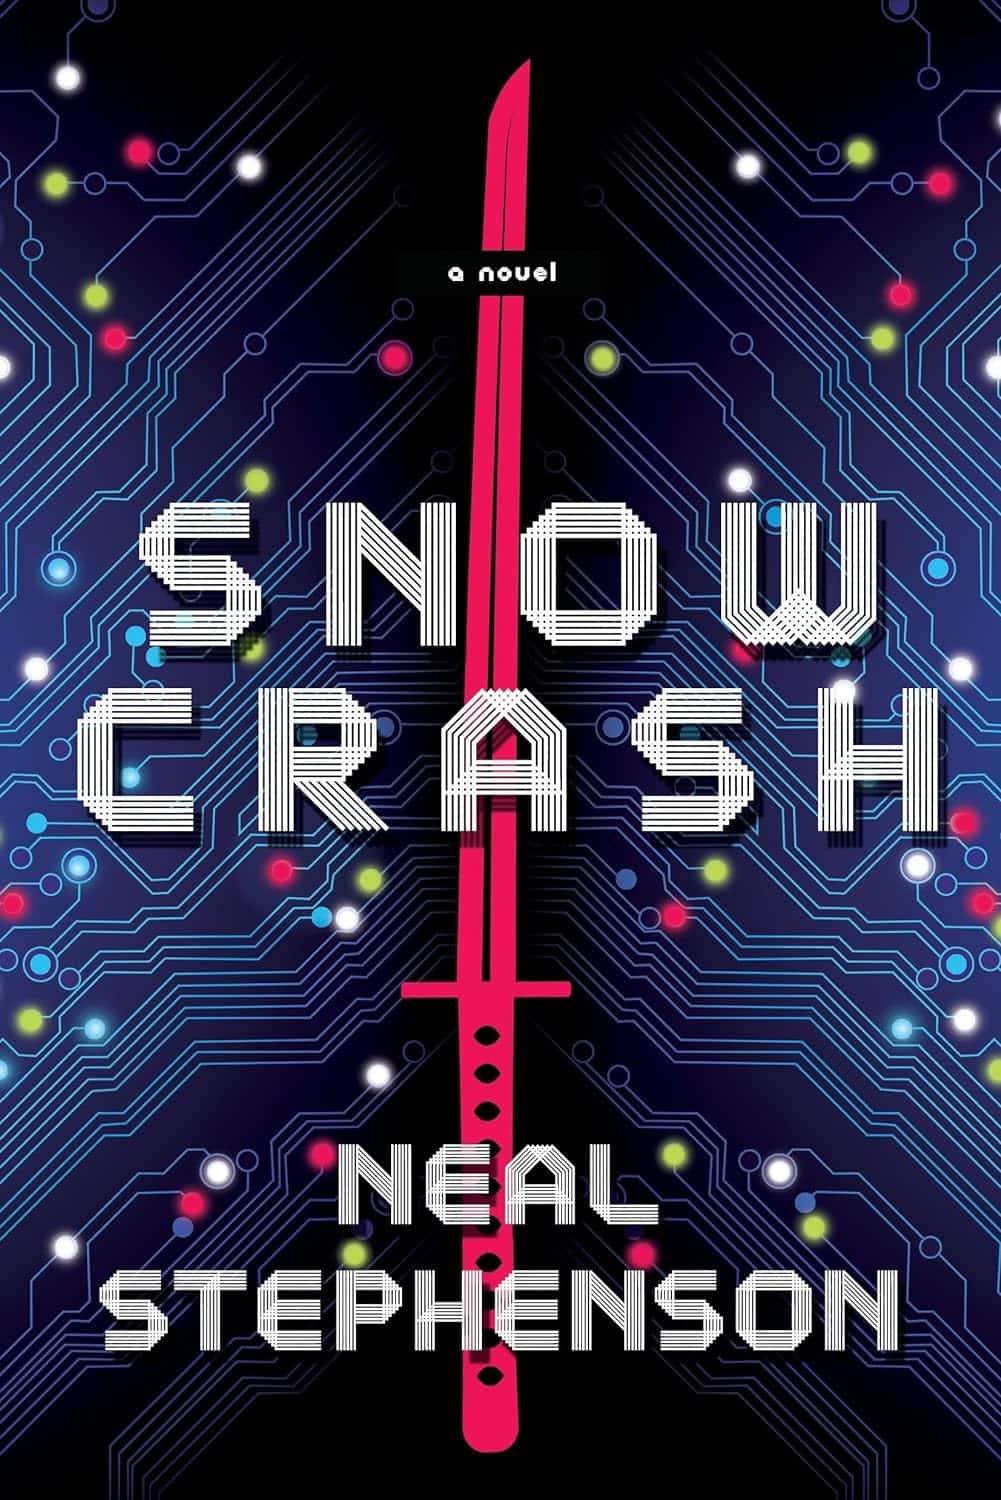 Snow Crash, by Neal Stephenson